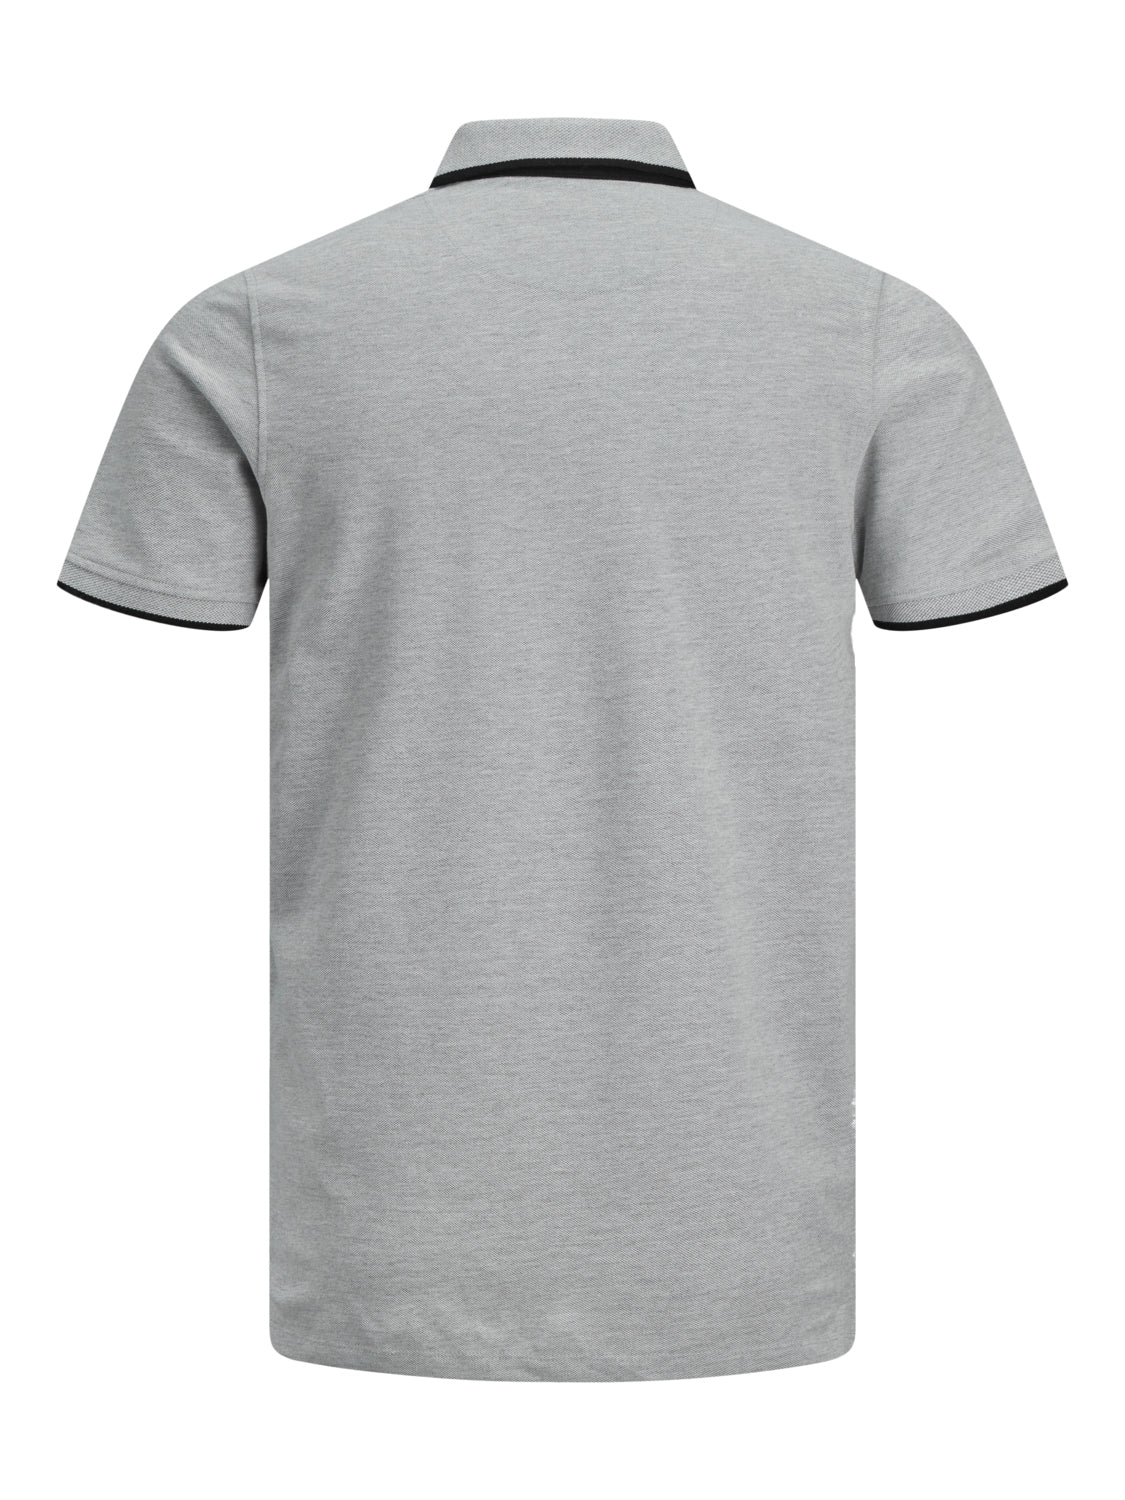 JJEPAULOS Polo Shirt - light grey melange